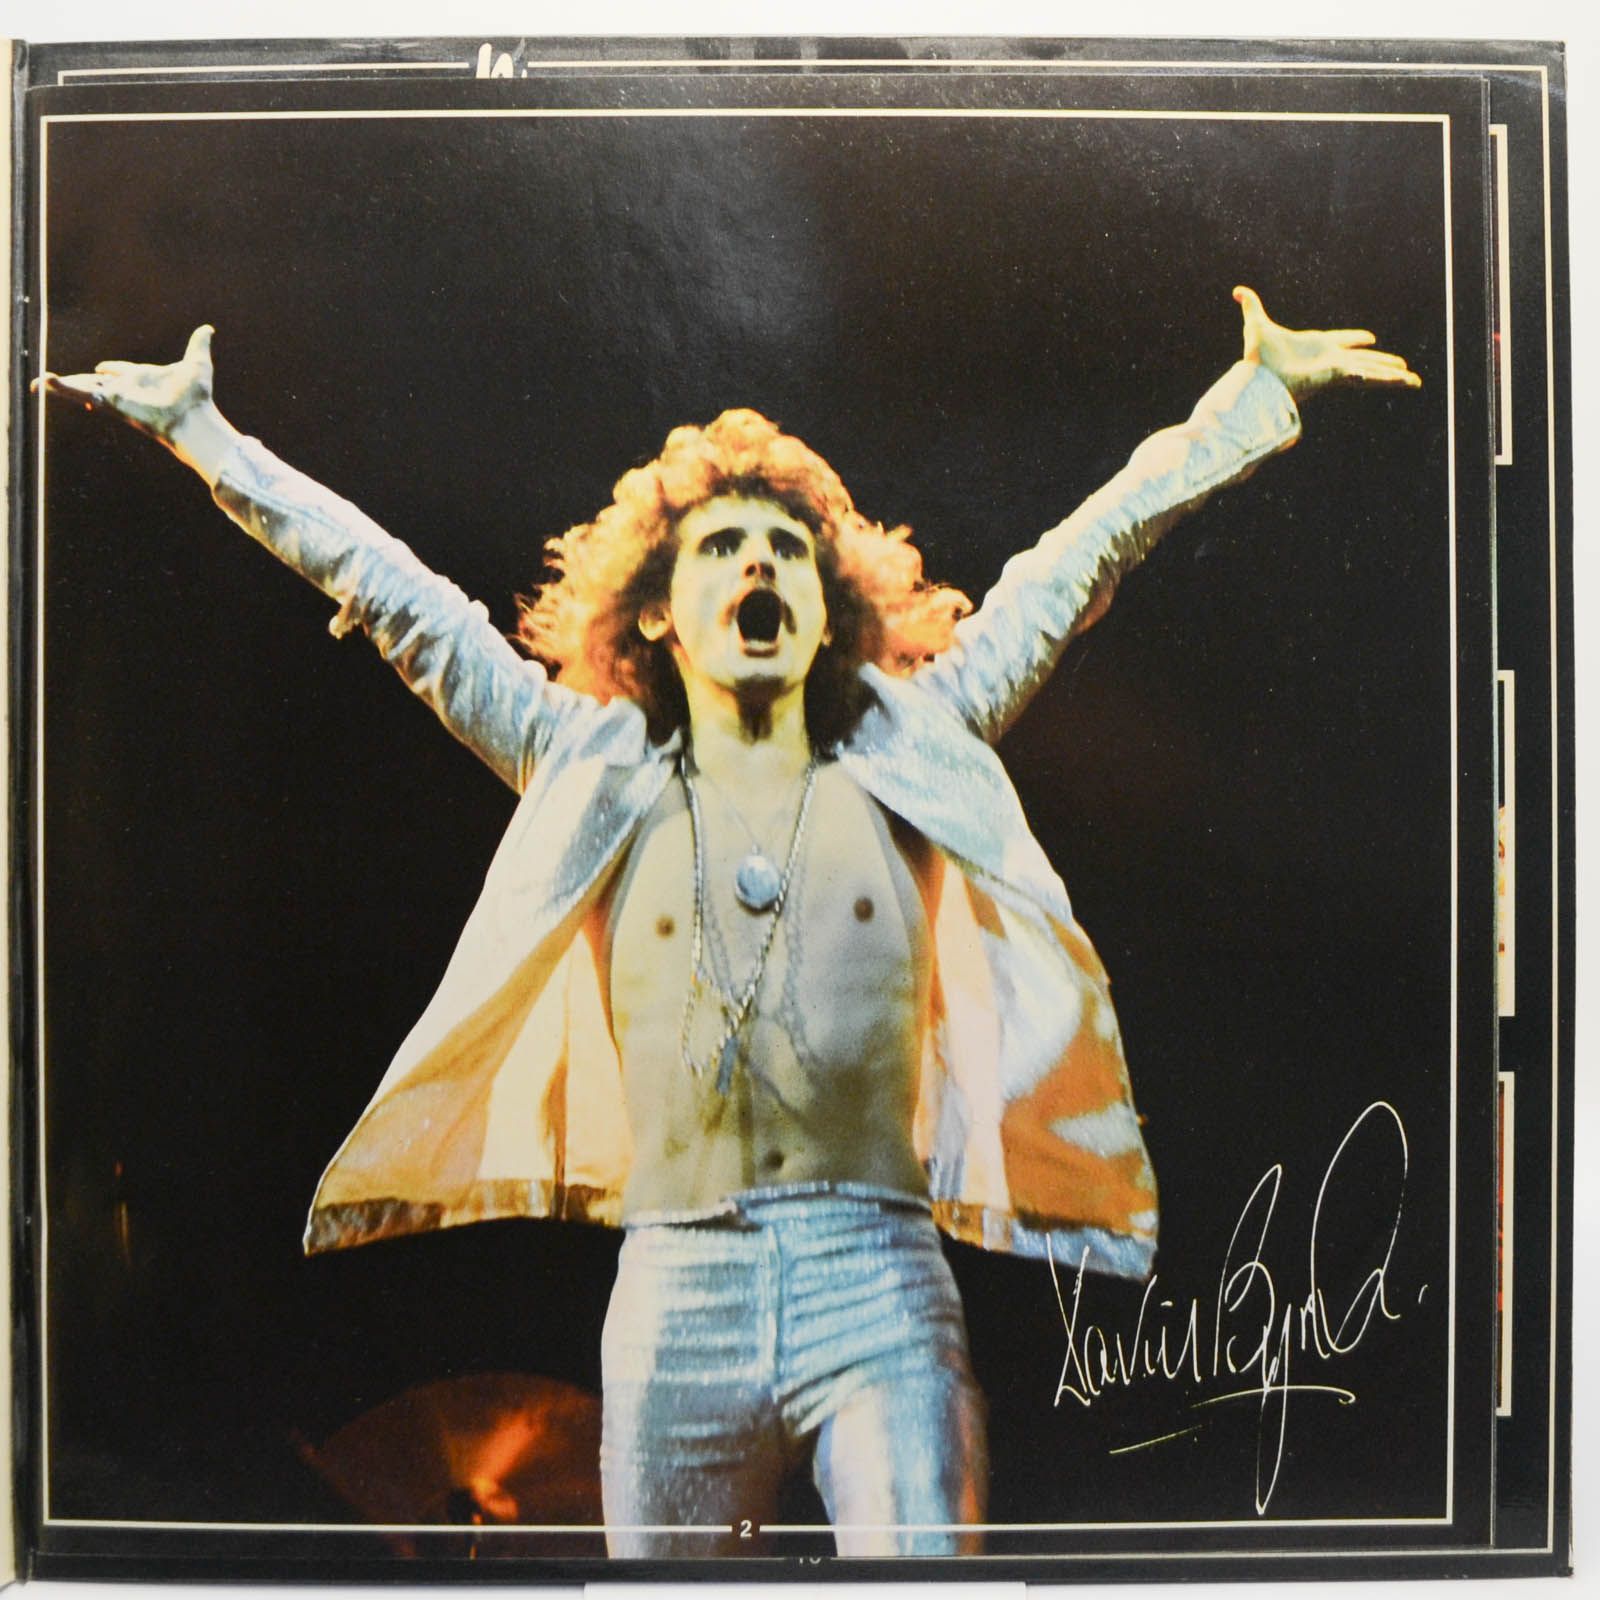 Uriah Heep — Uriah Heep Live (2LP, 1-st, UK, booklet), 1973